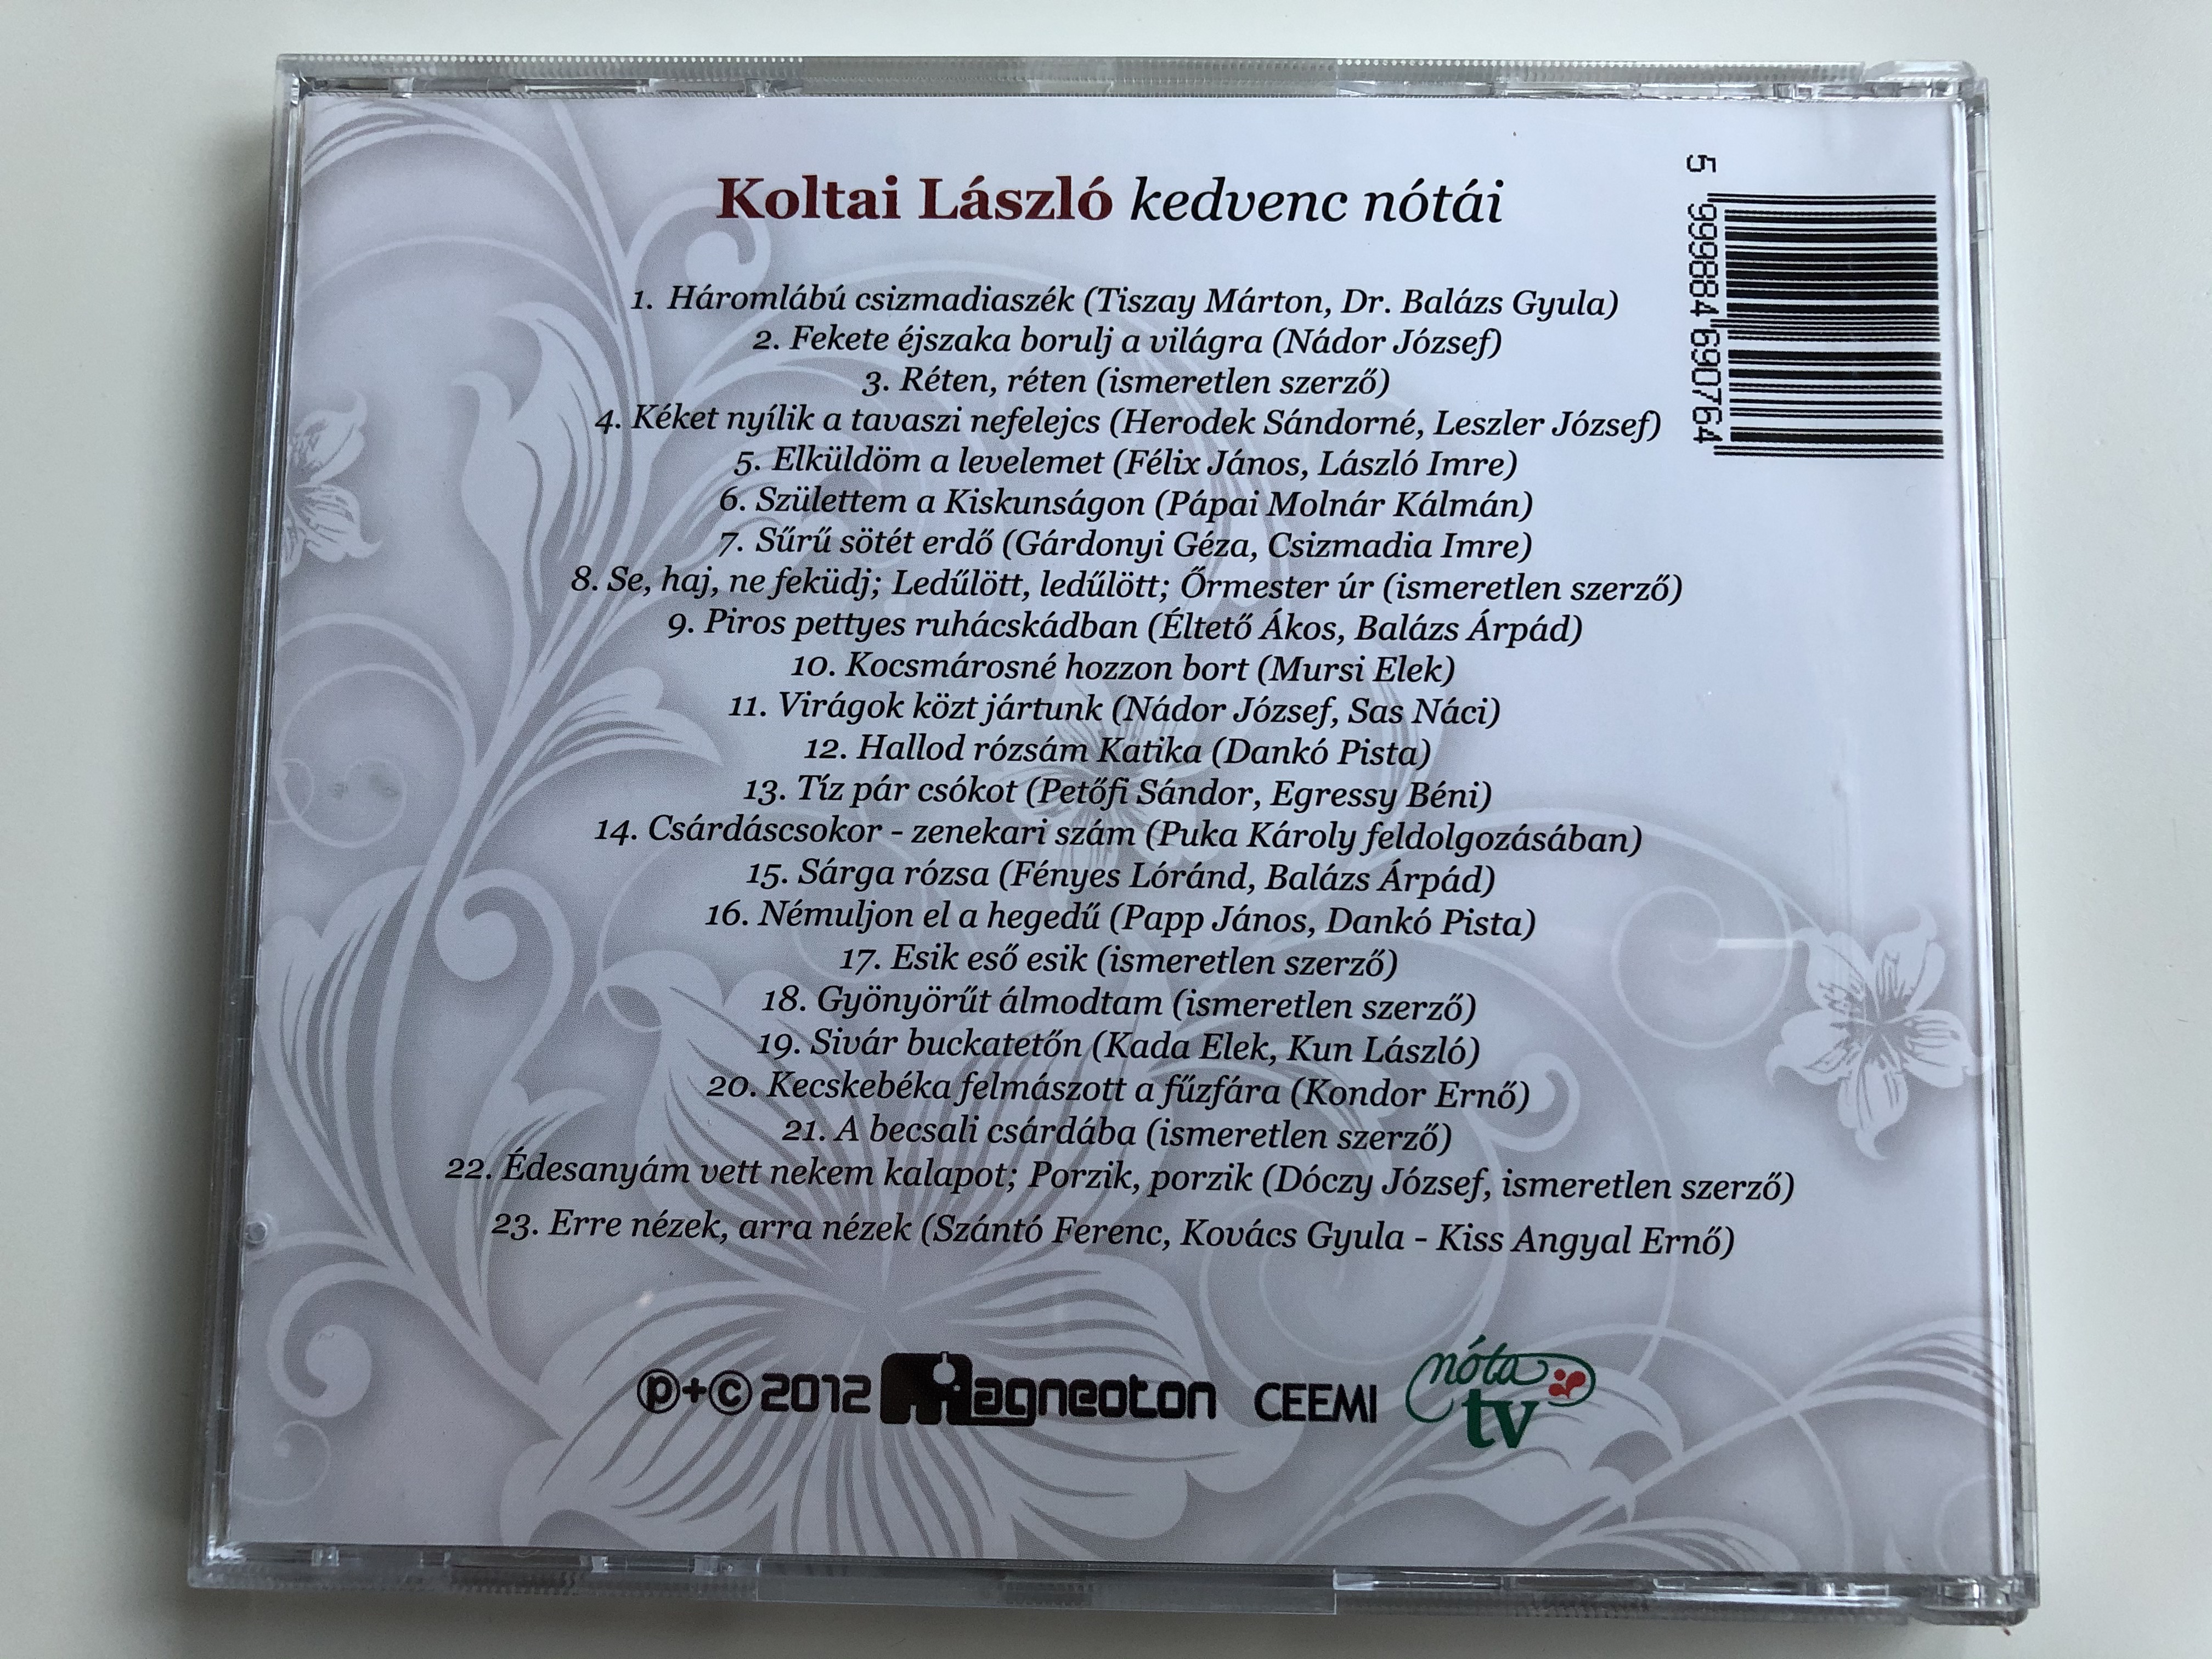 notasztar-gyoztese-koltai-laszlo-kedvenc-notai-magneoton-audio-cd-2012-5999884690764-5-.jpg